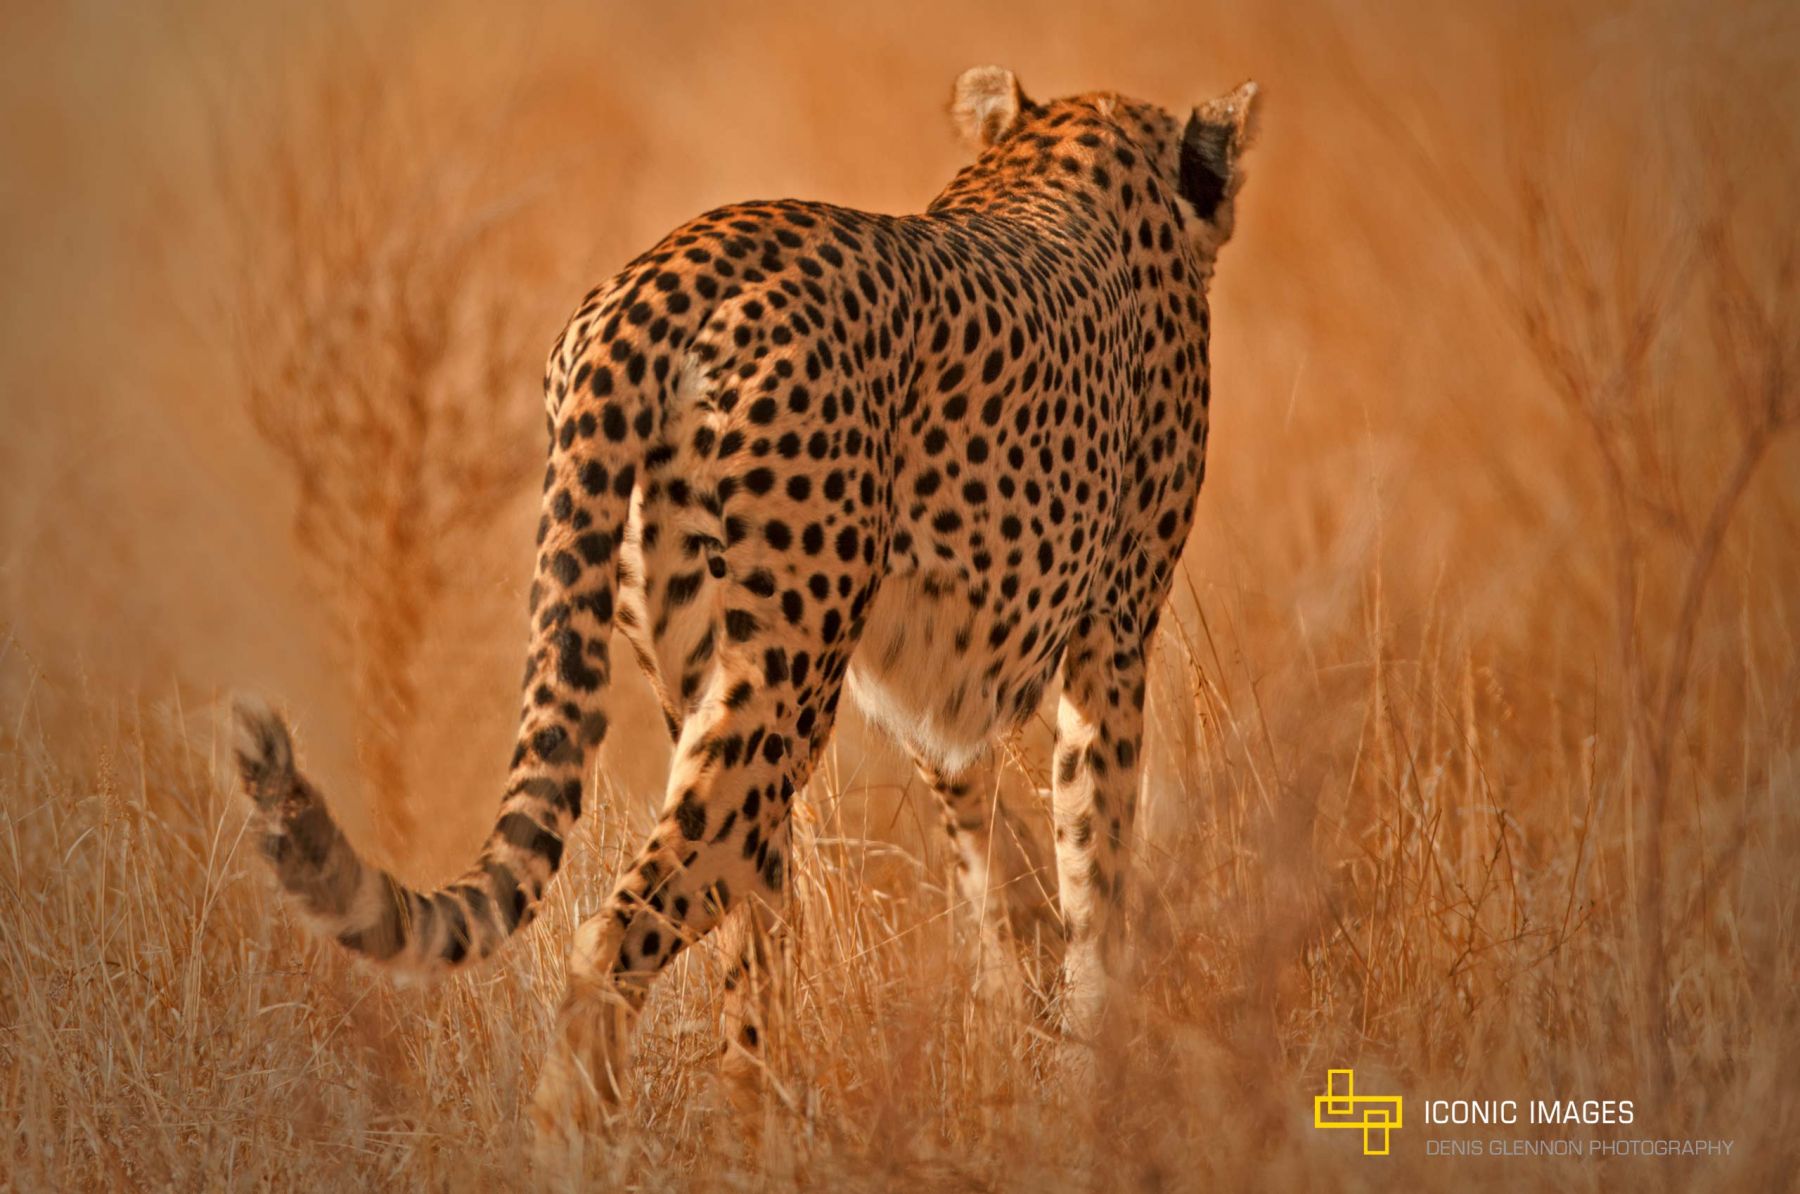 Cheetah-in-Sunset-Light